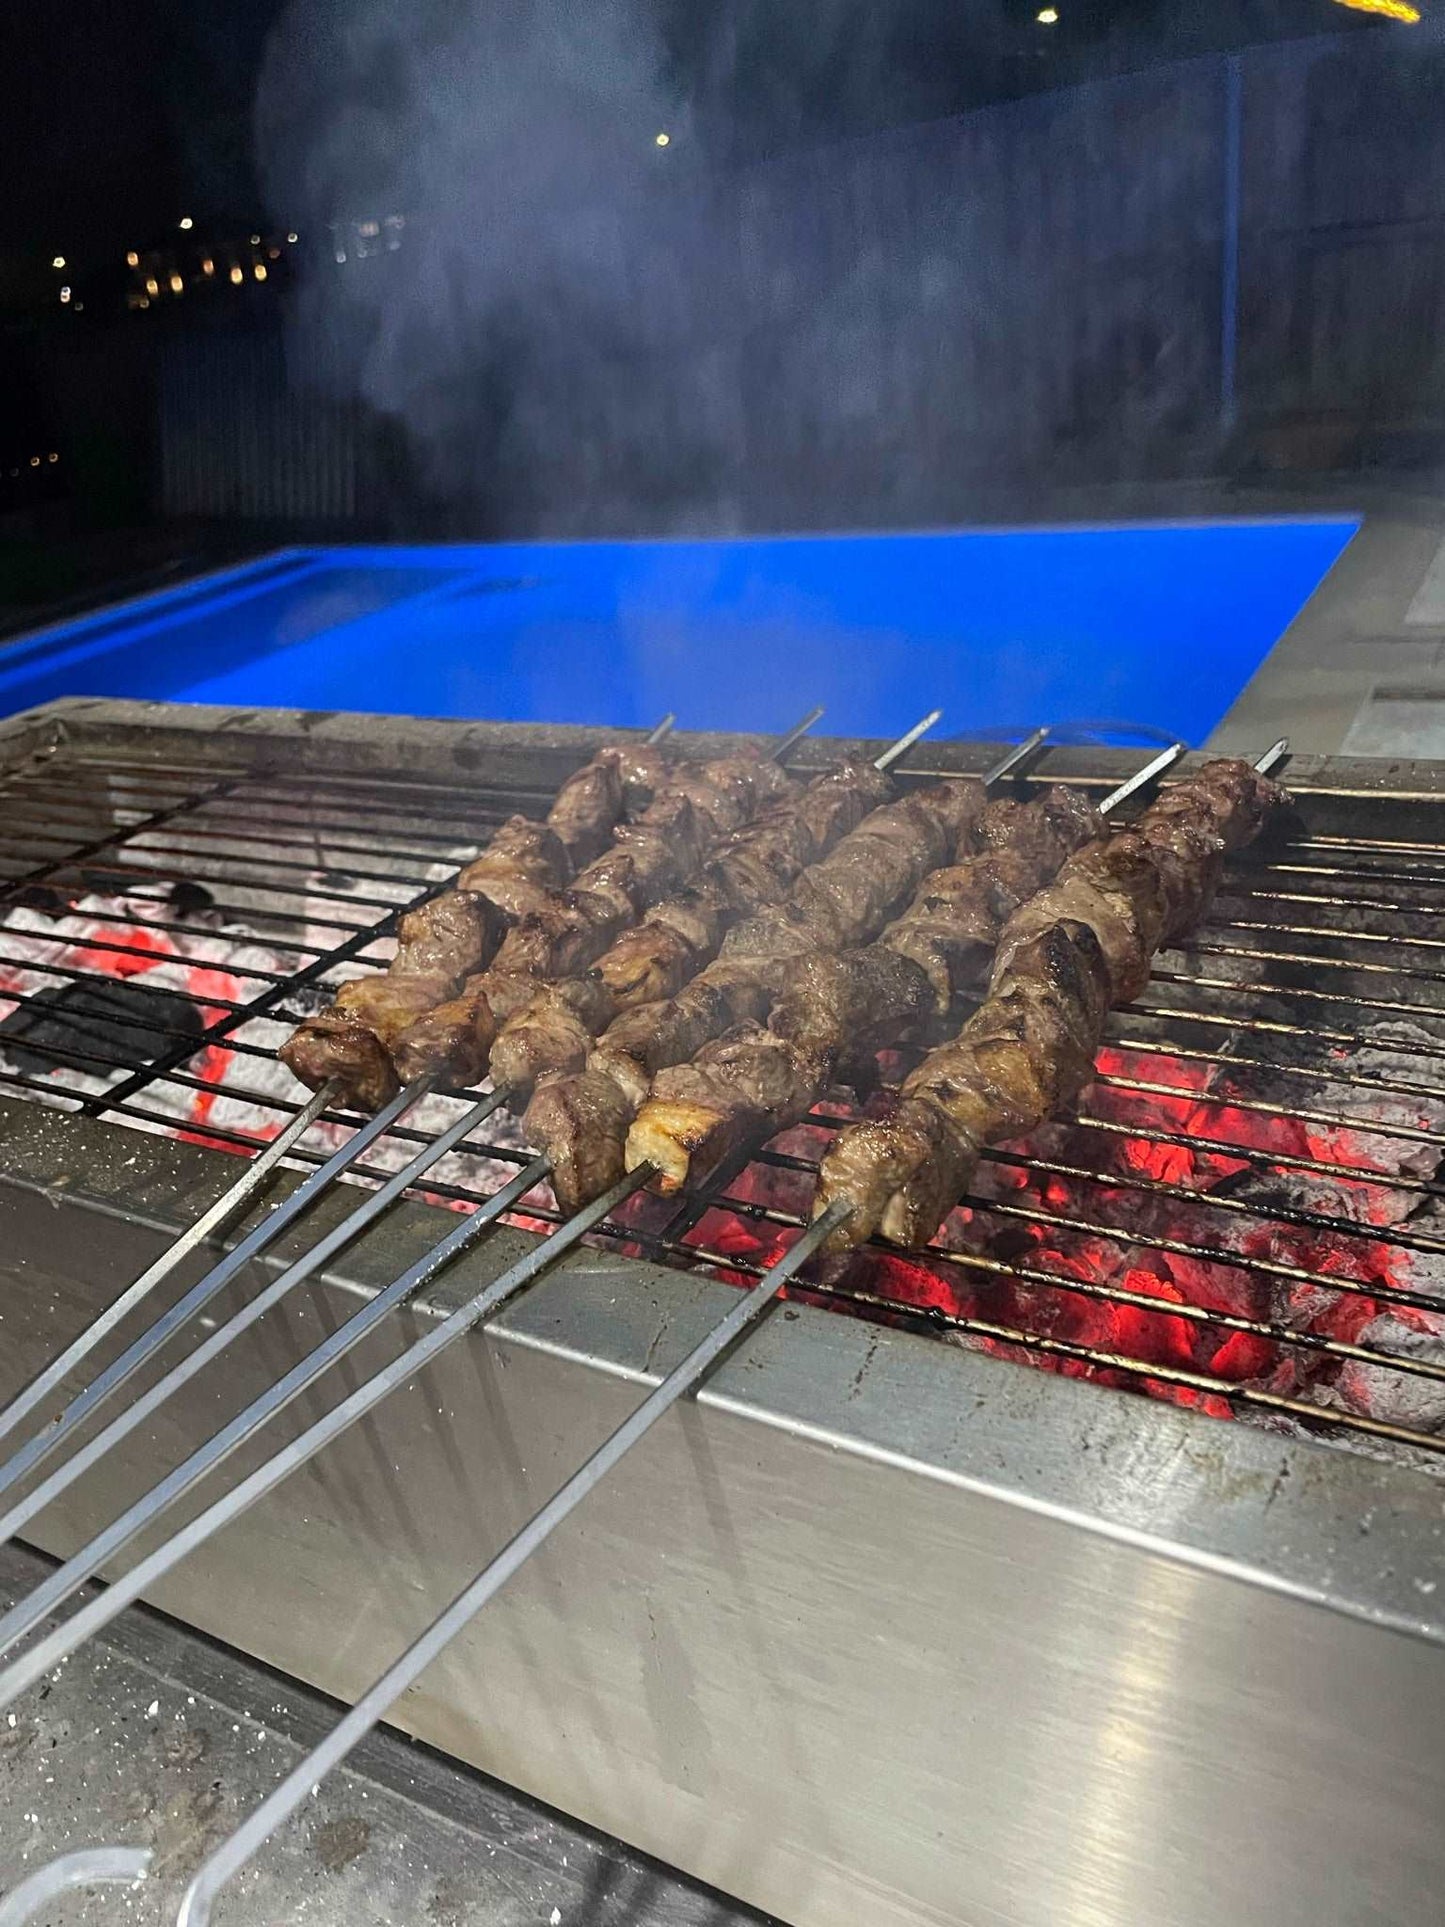 portable charcoal bbq on bench with shish kebabs